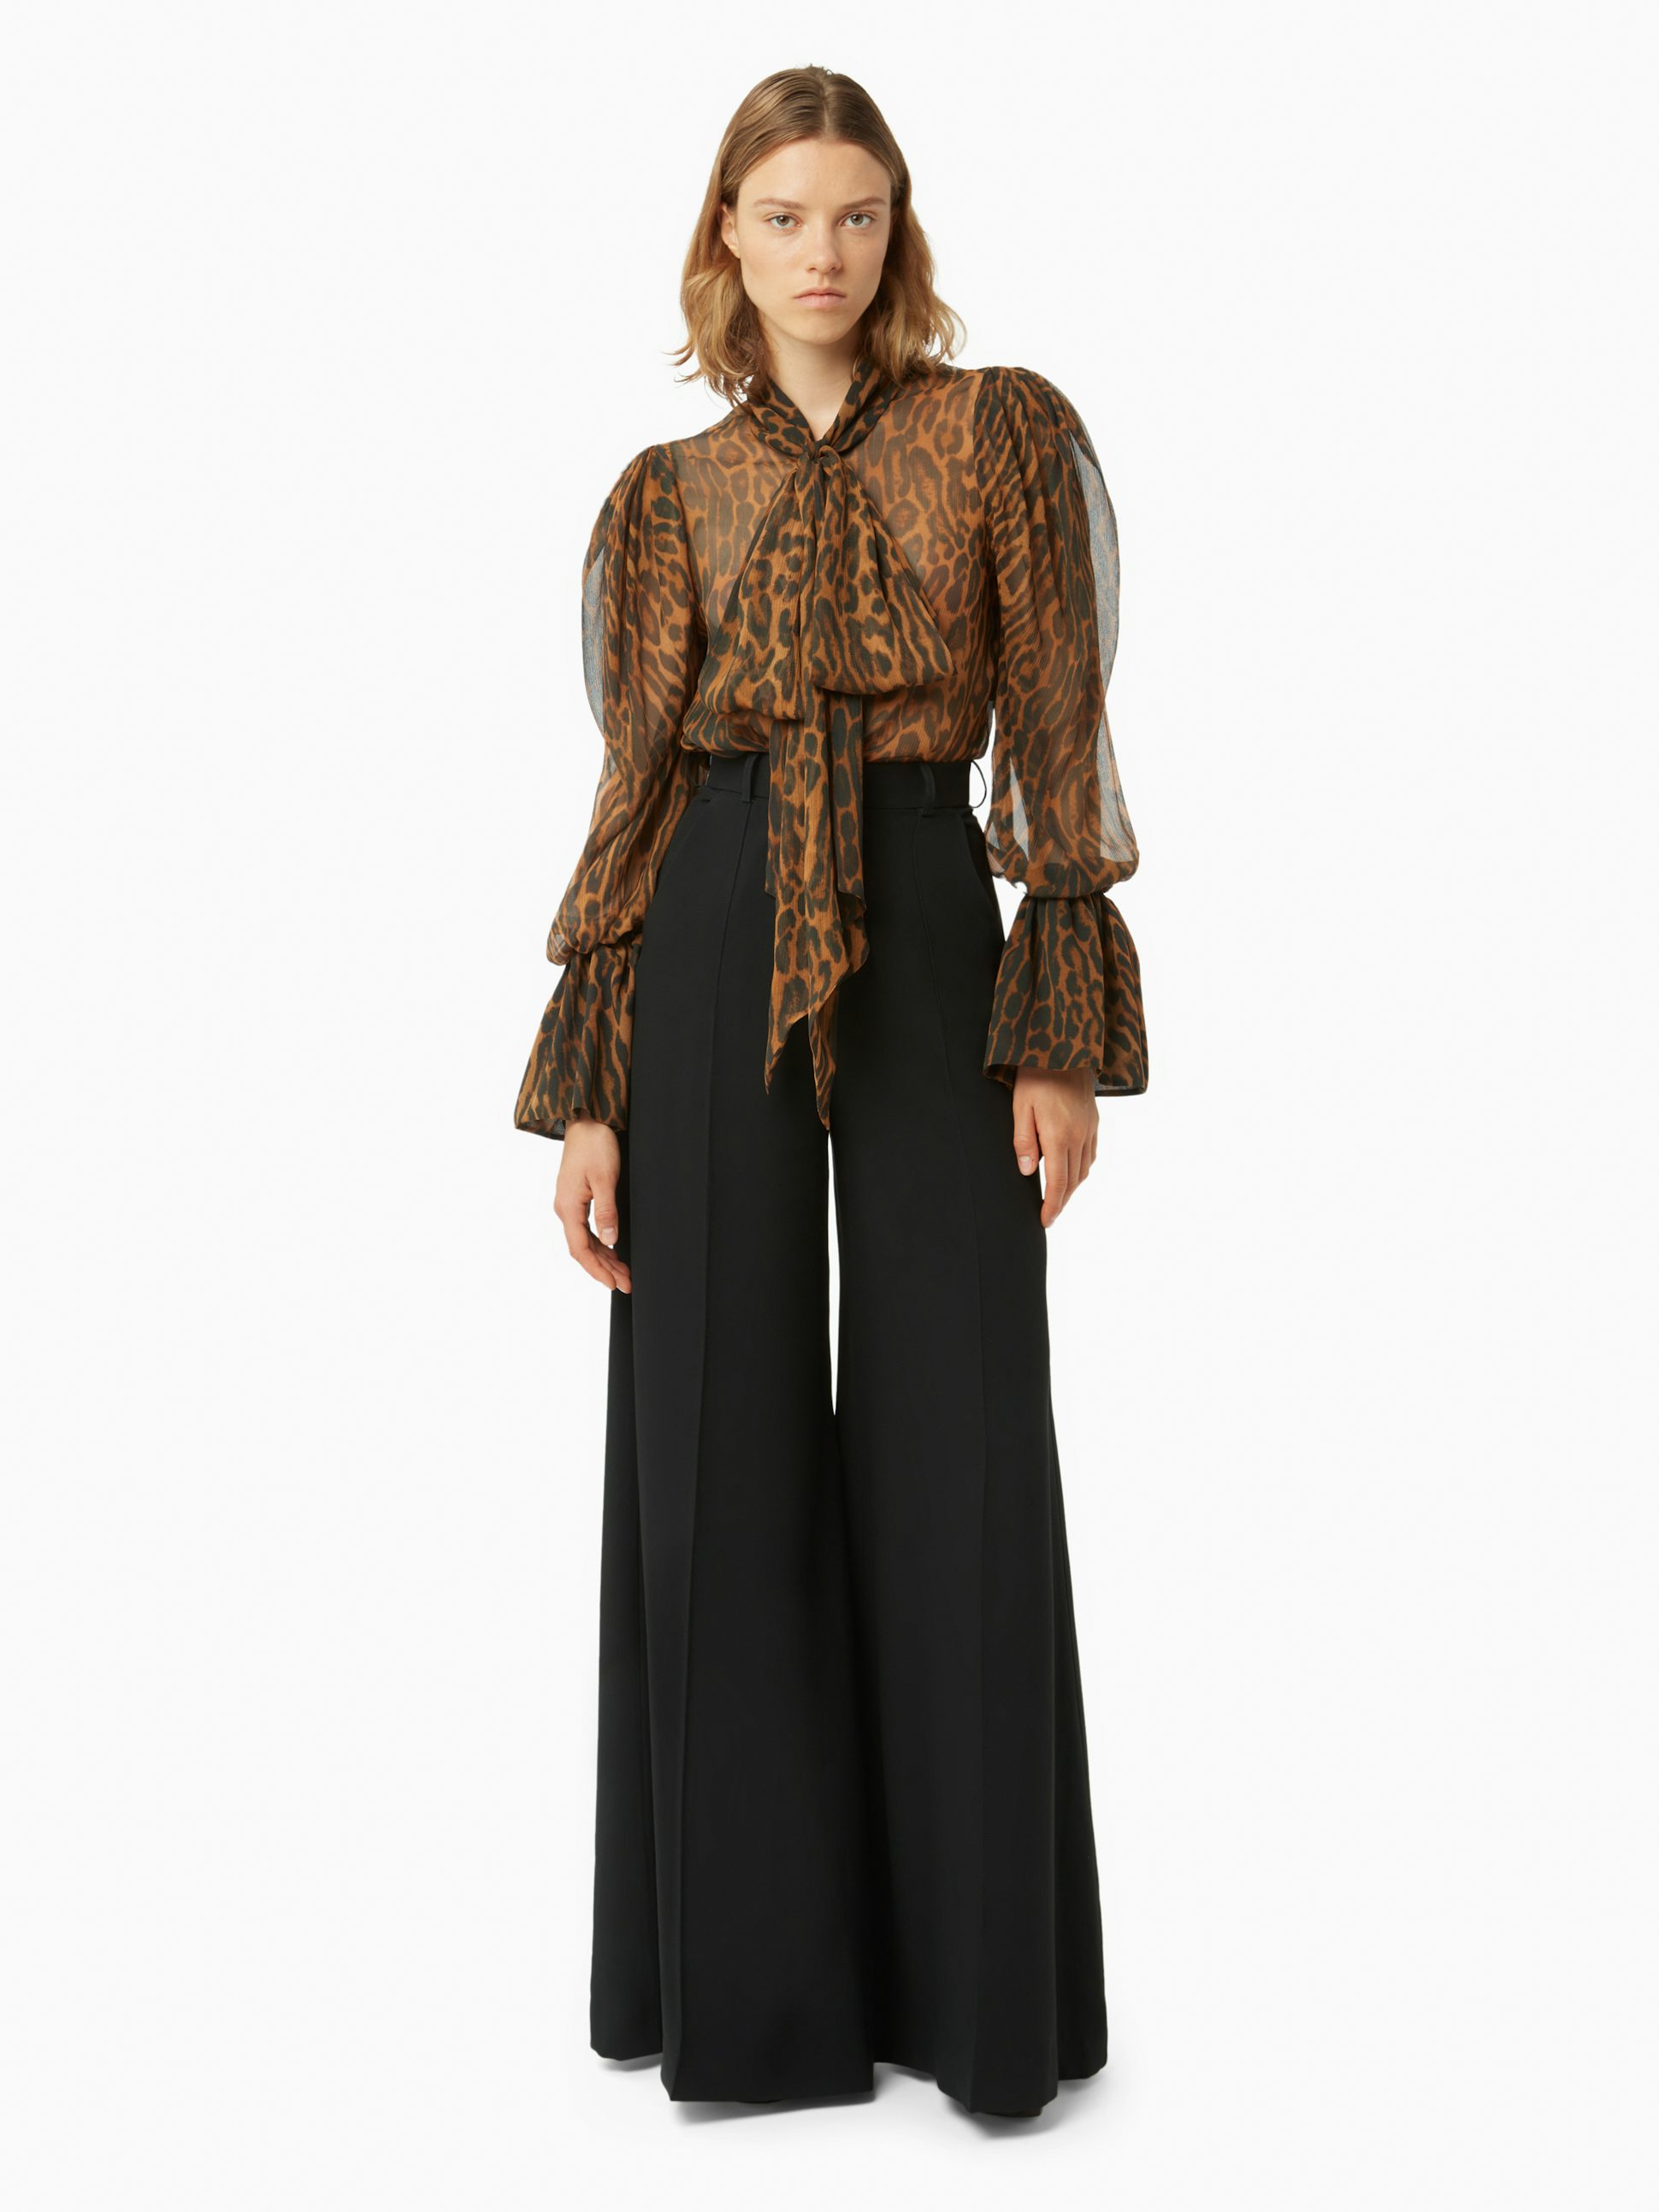 Leopard print bussy-bow shirt - Nina Ricci